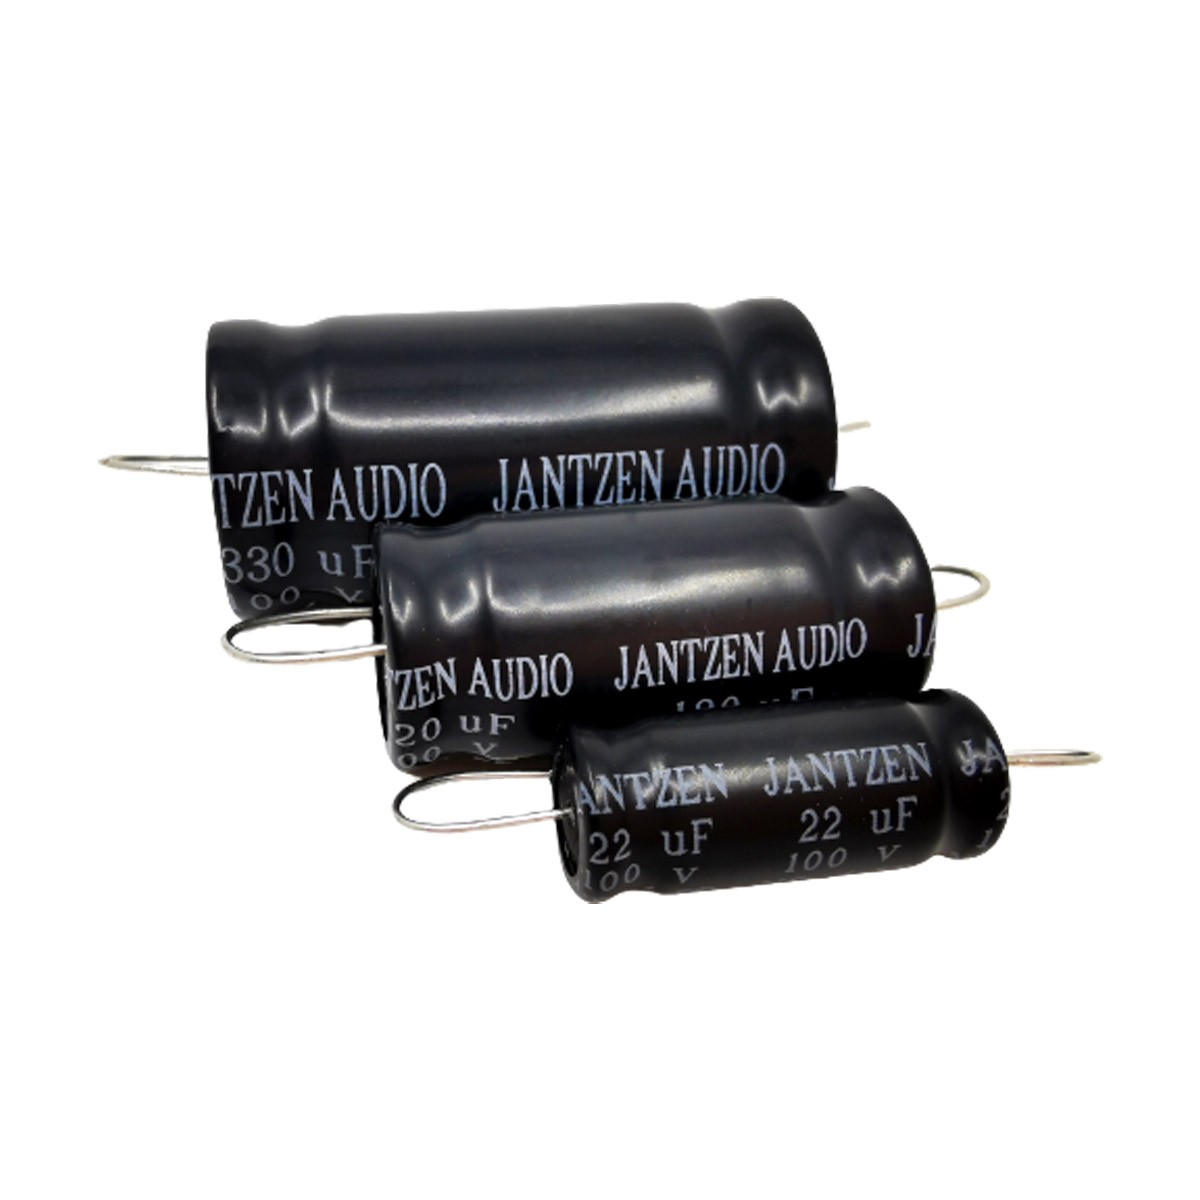 JANTZEN AUDIO ELECAP Electrolytic Capacitor 100V 300µF 5%